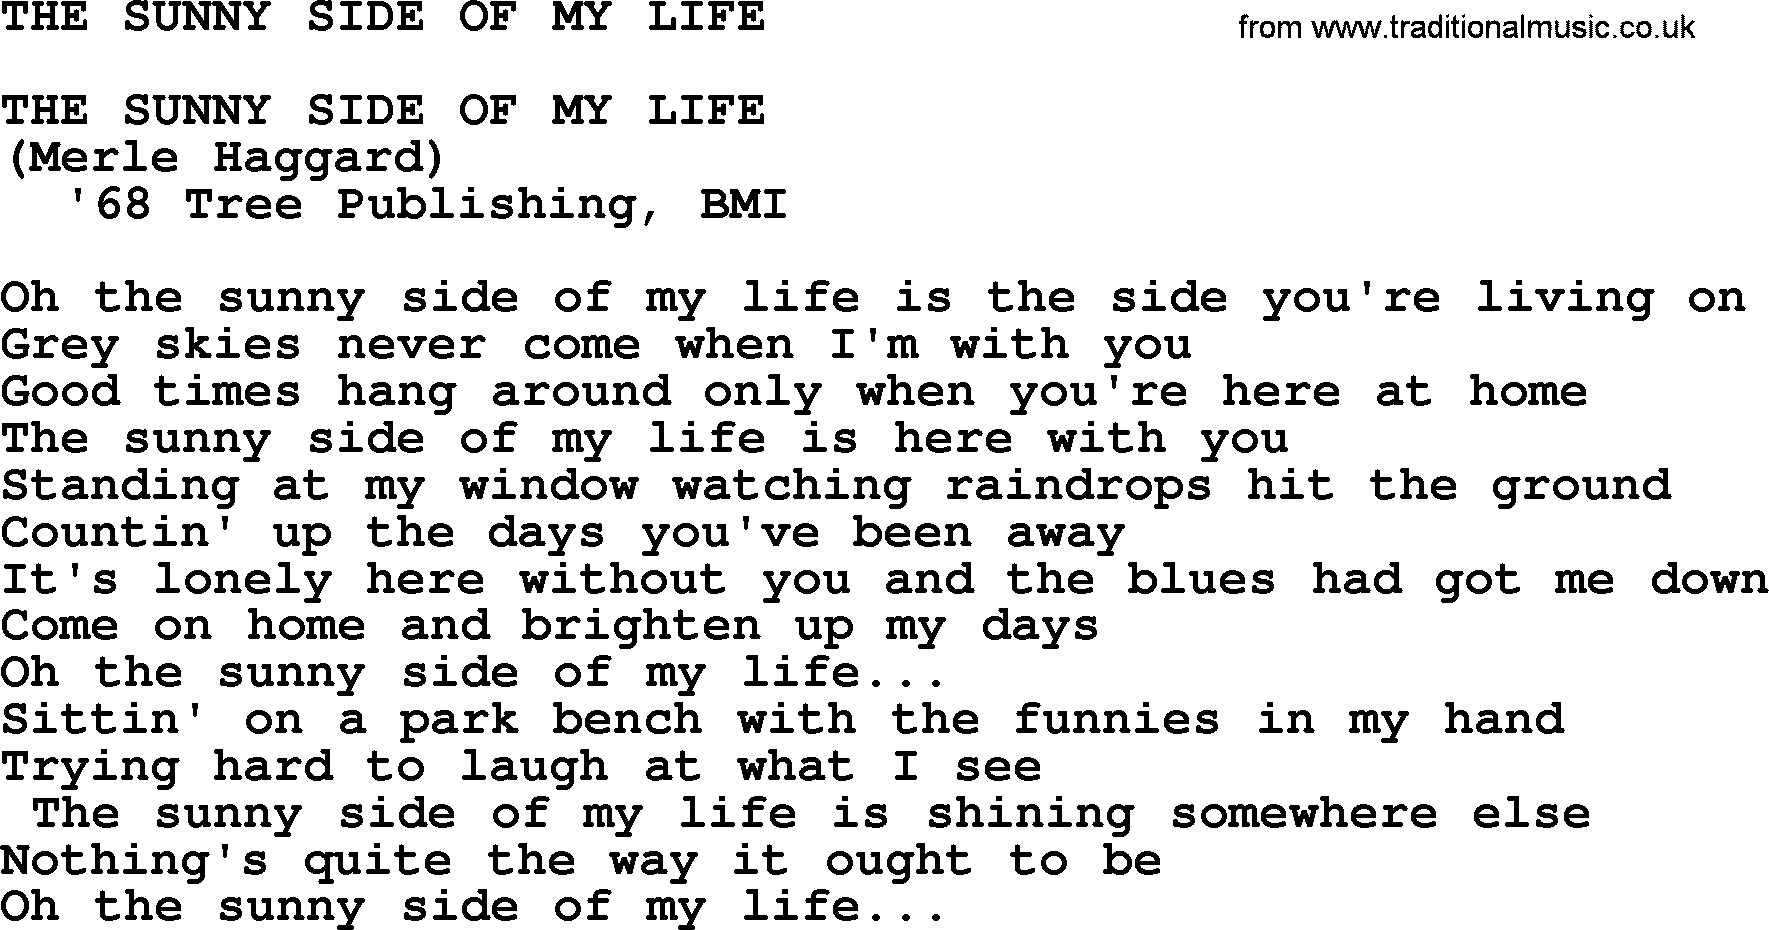 Merle Haggard song: The Sunny Side Of My Life, lyrics.